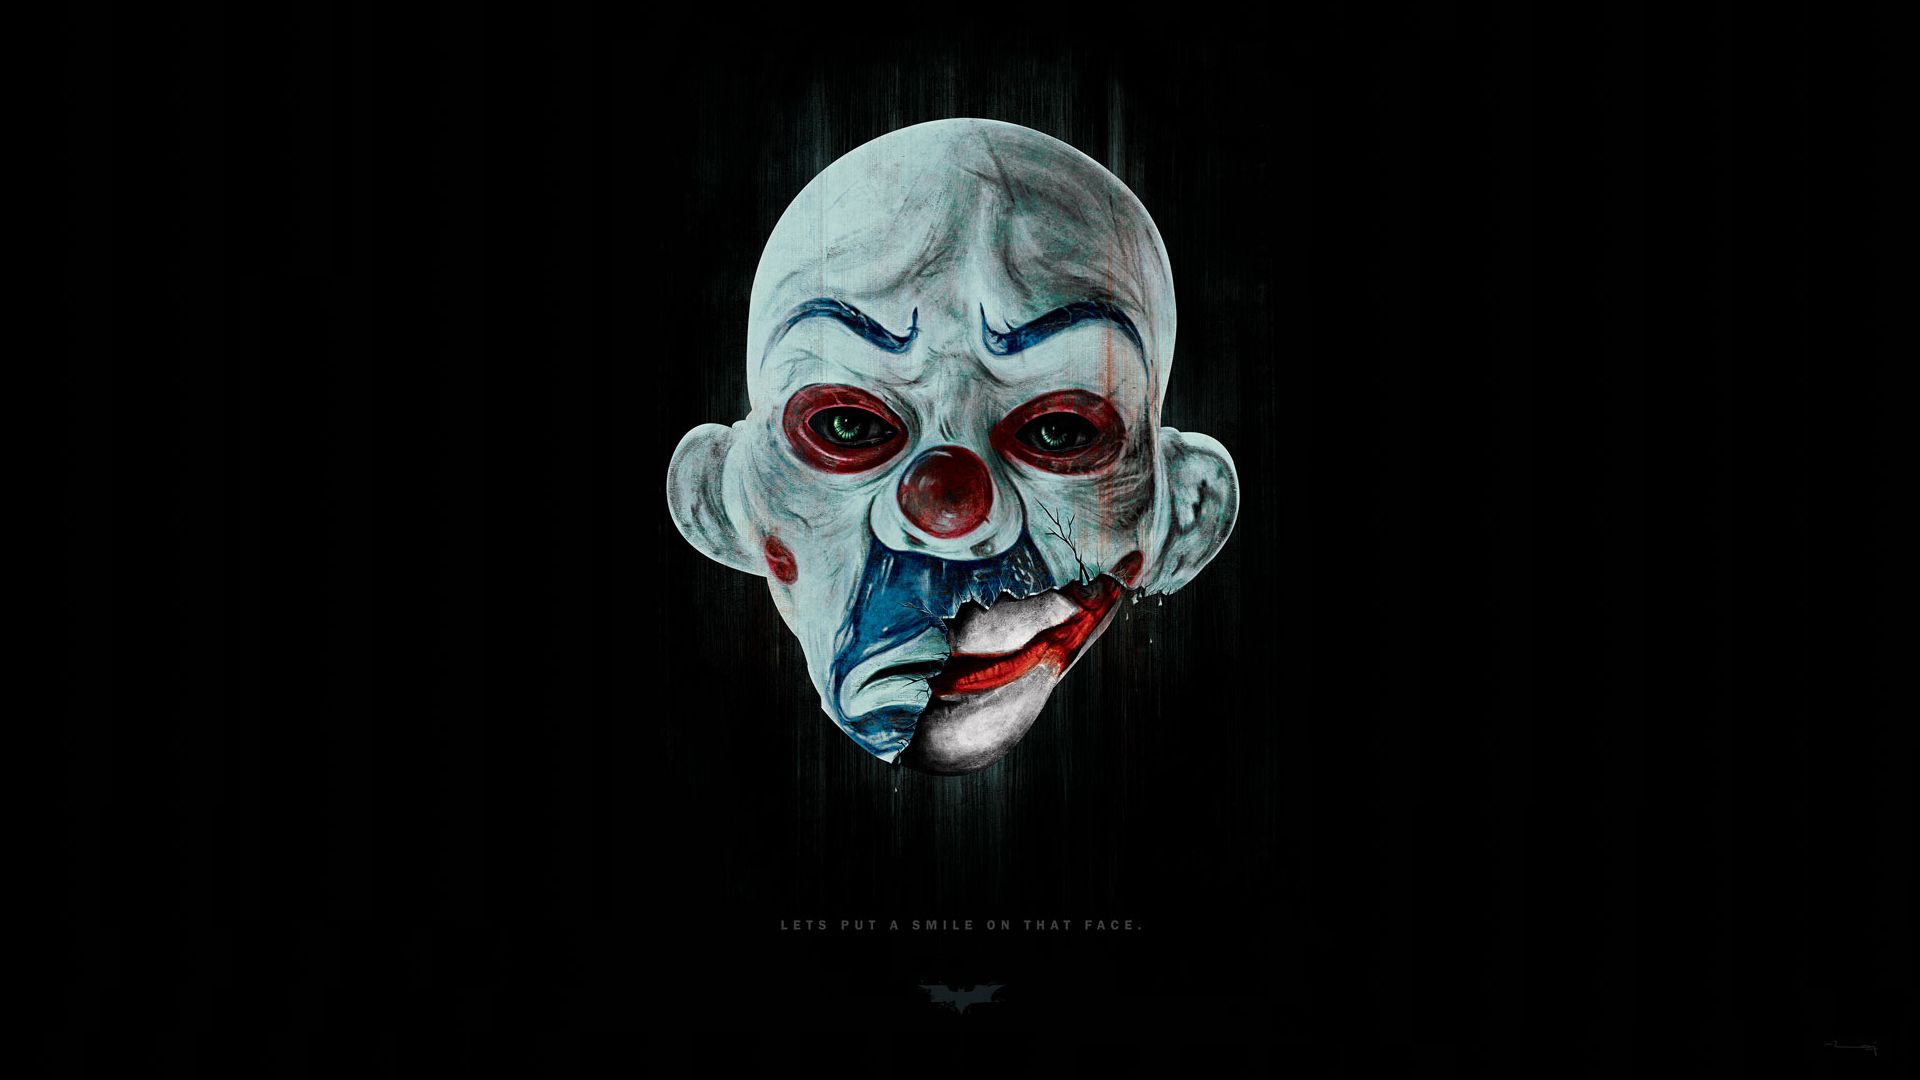 quick Joker 1920 x 1080 wallpaper .reddit.com